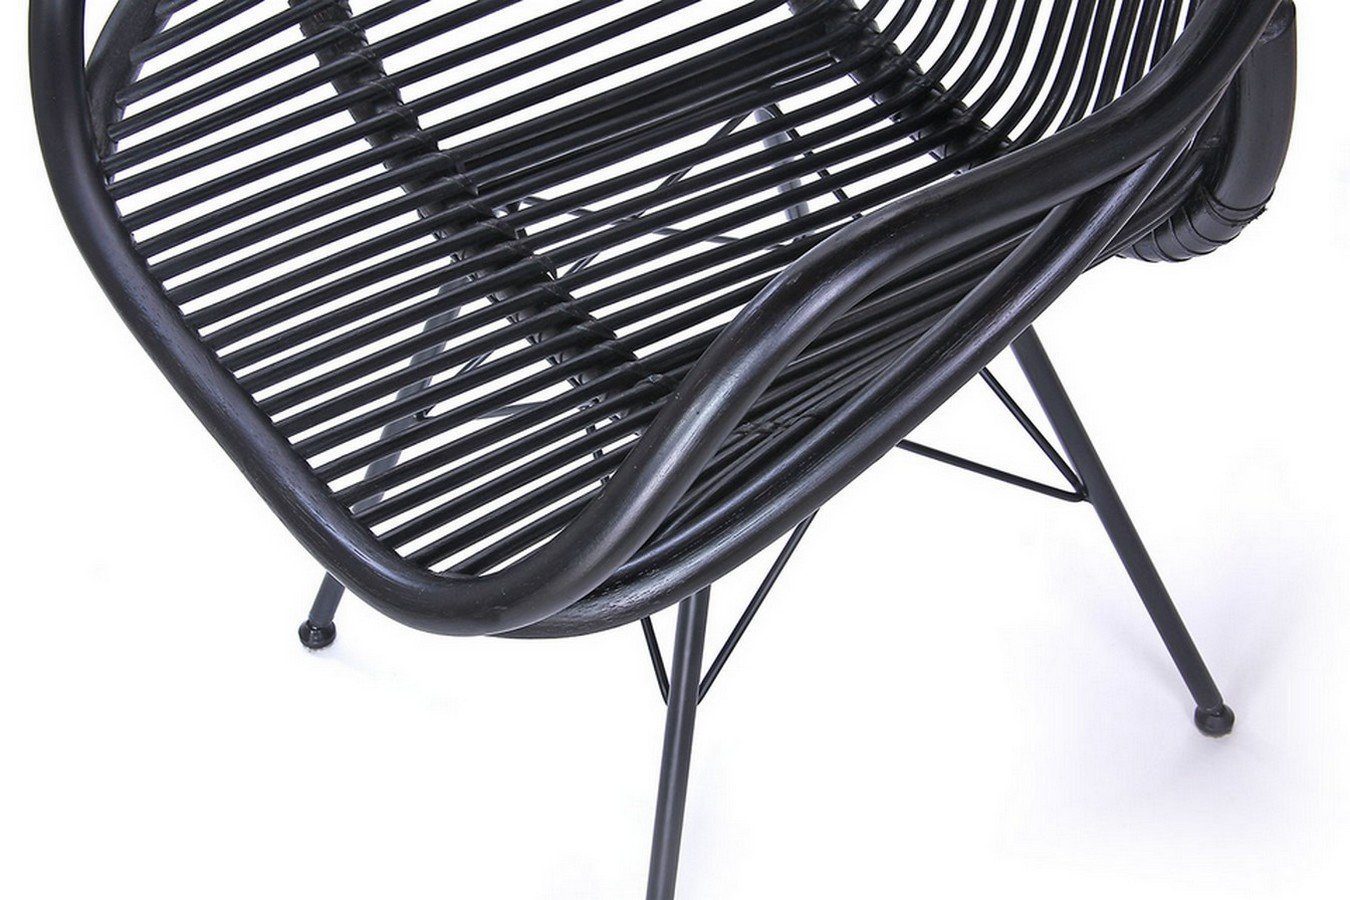 jankurtz Retro-Style Rattanstuhl Area Stuhl schwarz